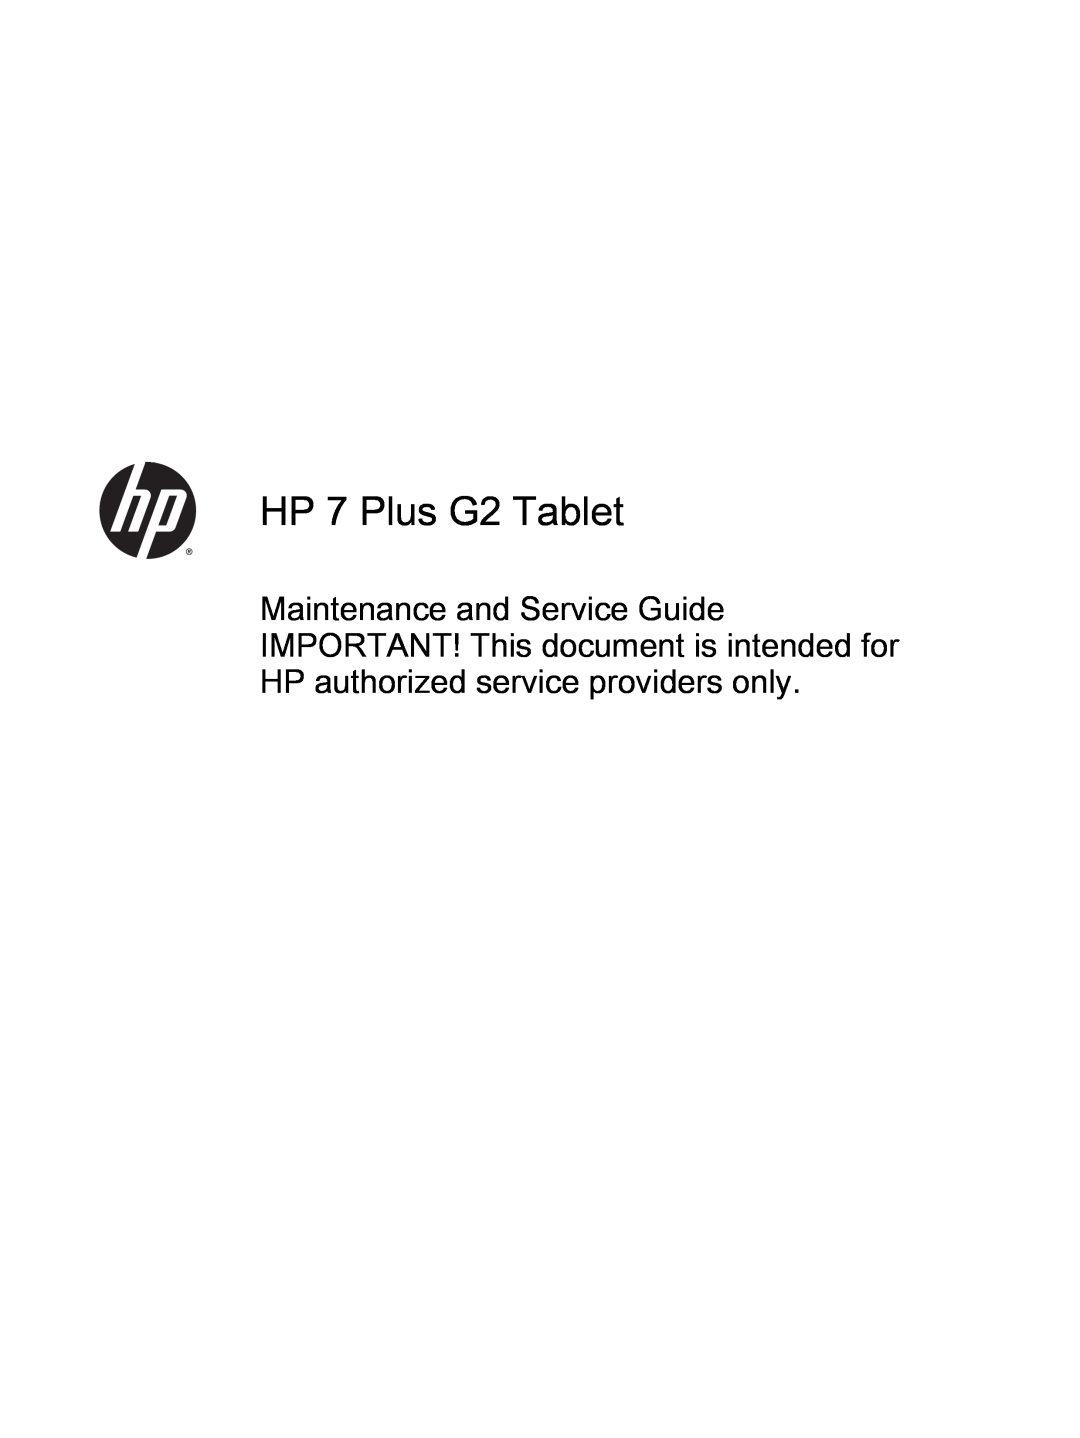 HP 7 Plus G2 - 1331 manual HP 7 Plus G2 Tablet 